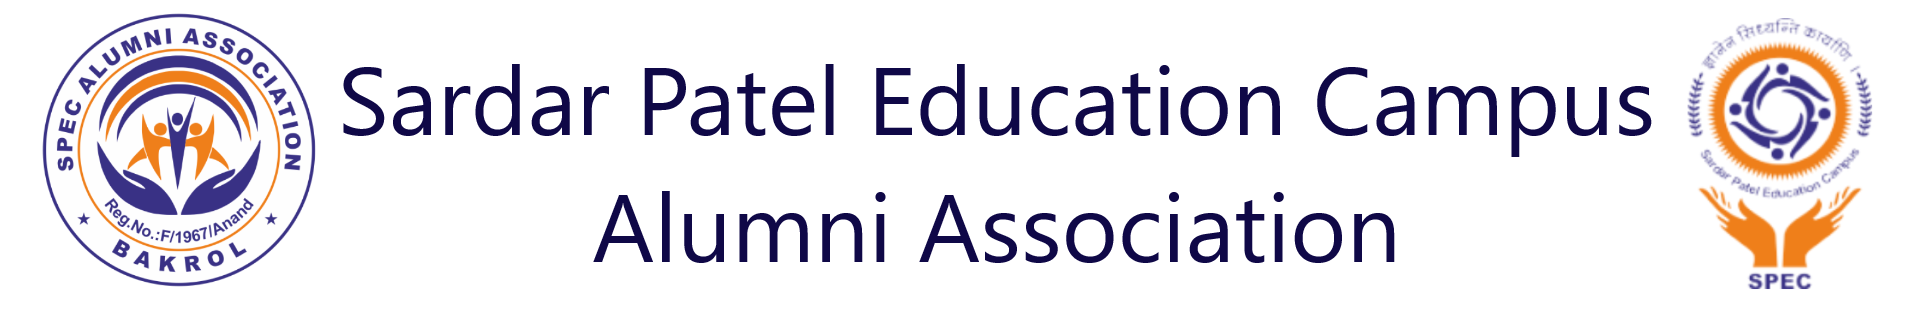 Sardar Patel Education Campus (Association) Trust